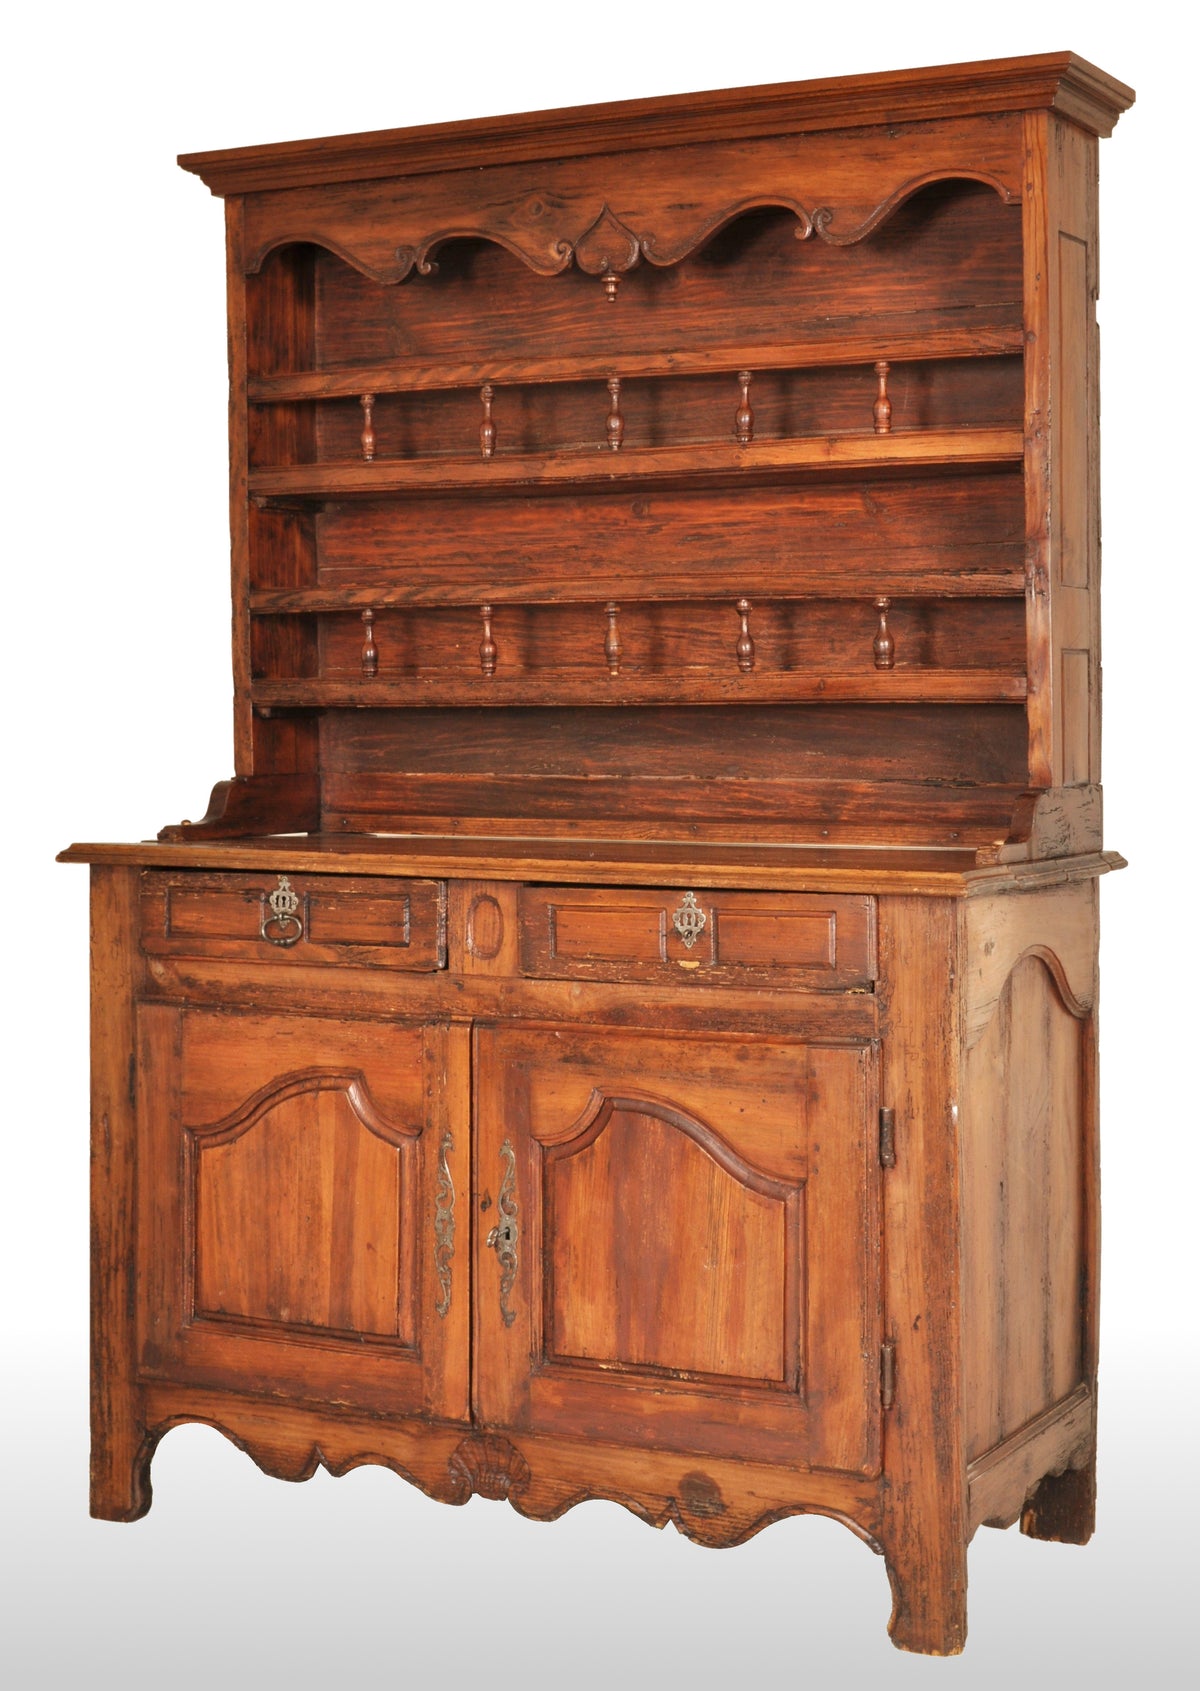 Antique 18th Century French Provincial Dresser / Buffet / Sideboard / Server / Vaisselier, circa 1750